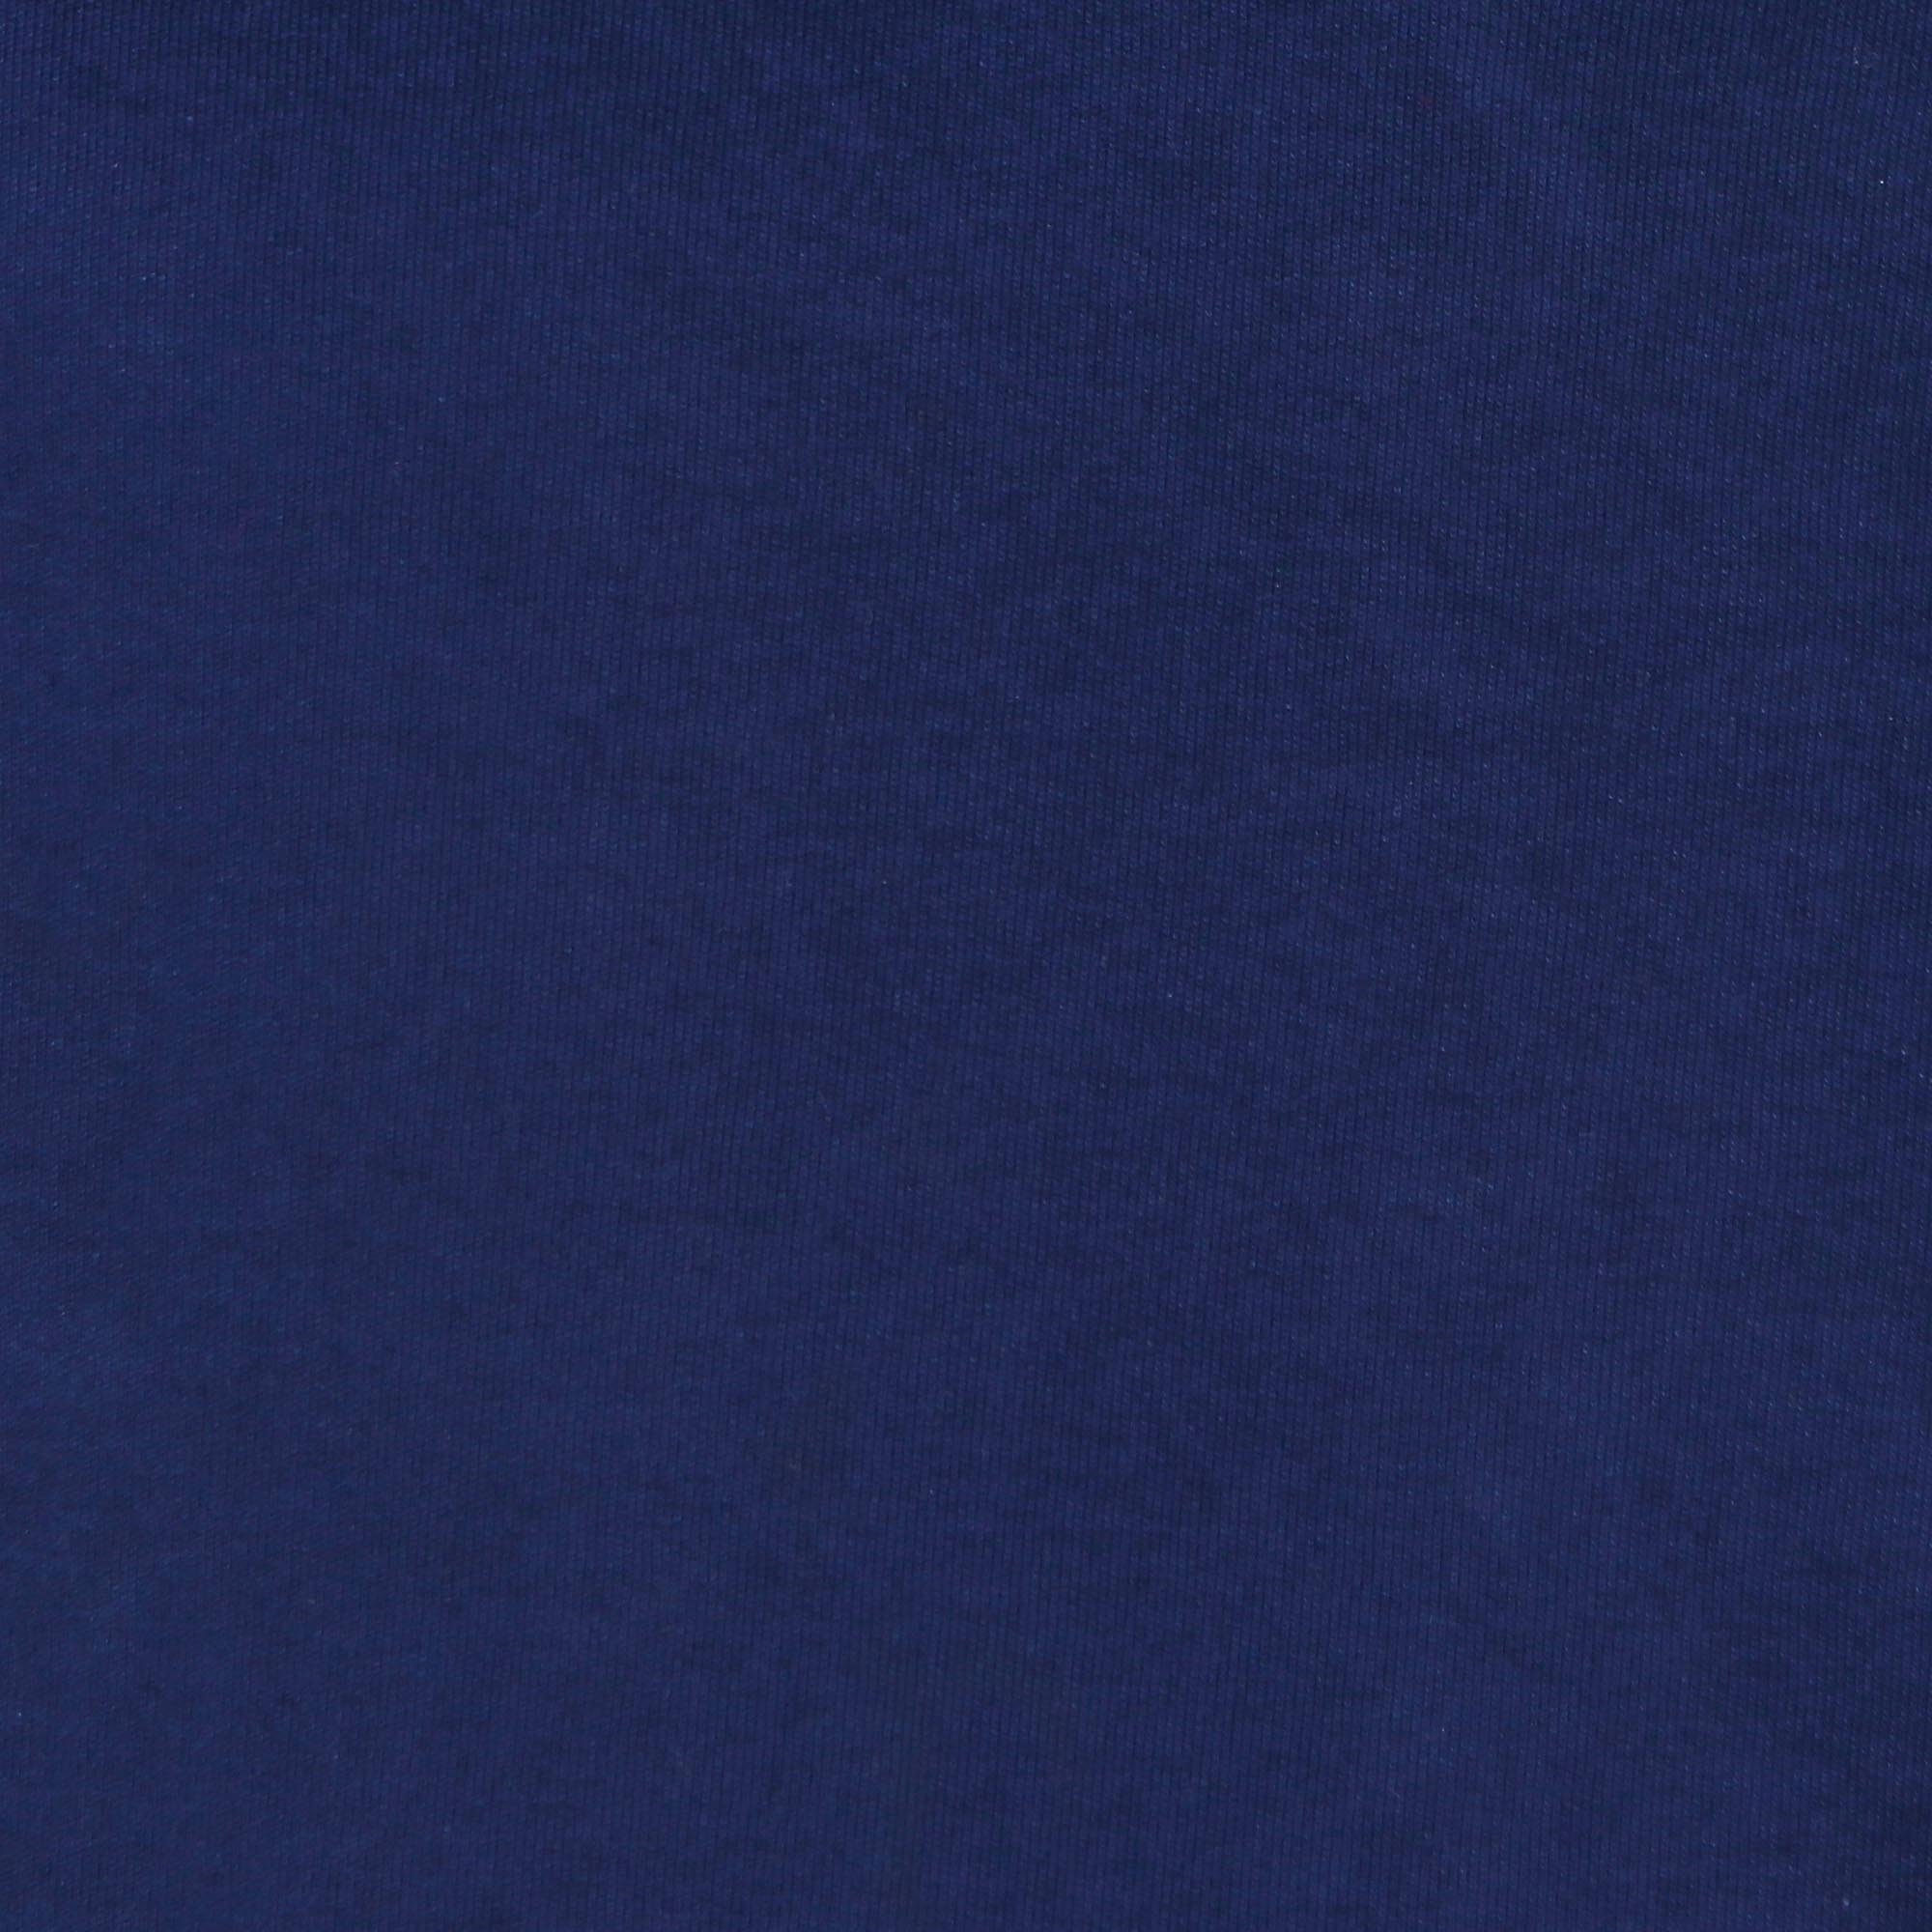 Мужская футболка-поло Diva Teks синяя (DTD-10), цвет синий, размер 44-46 - фото 6